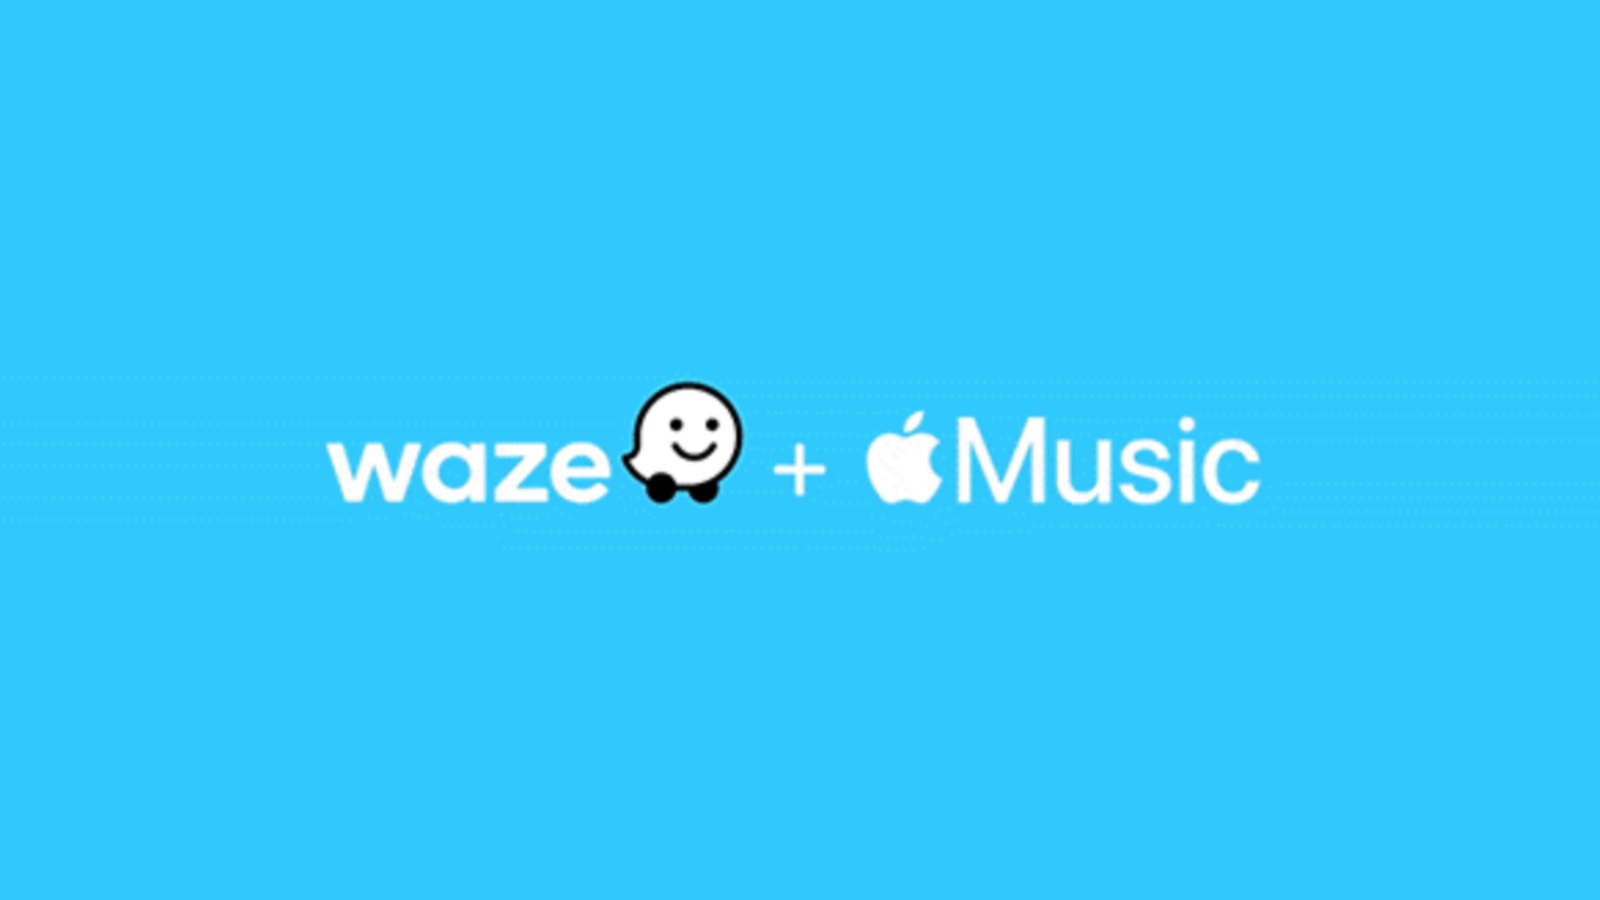 waze-apple-music-integration-9to5mac